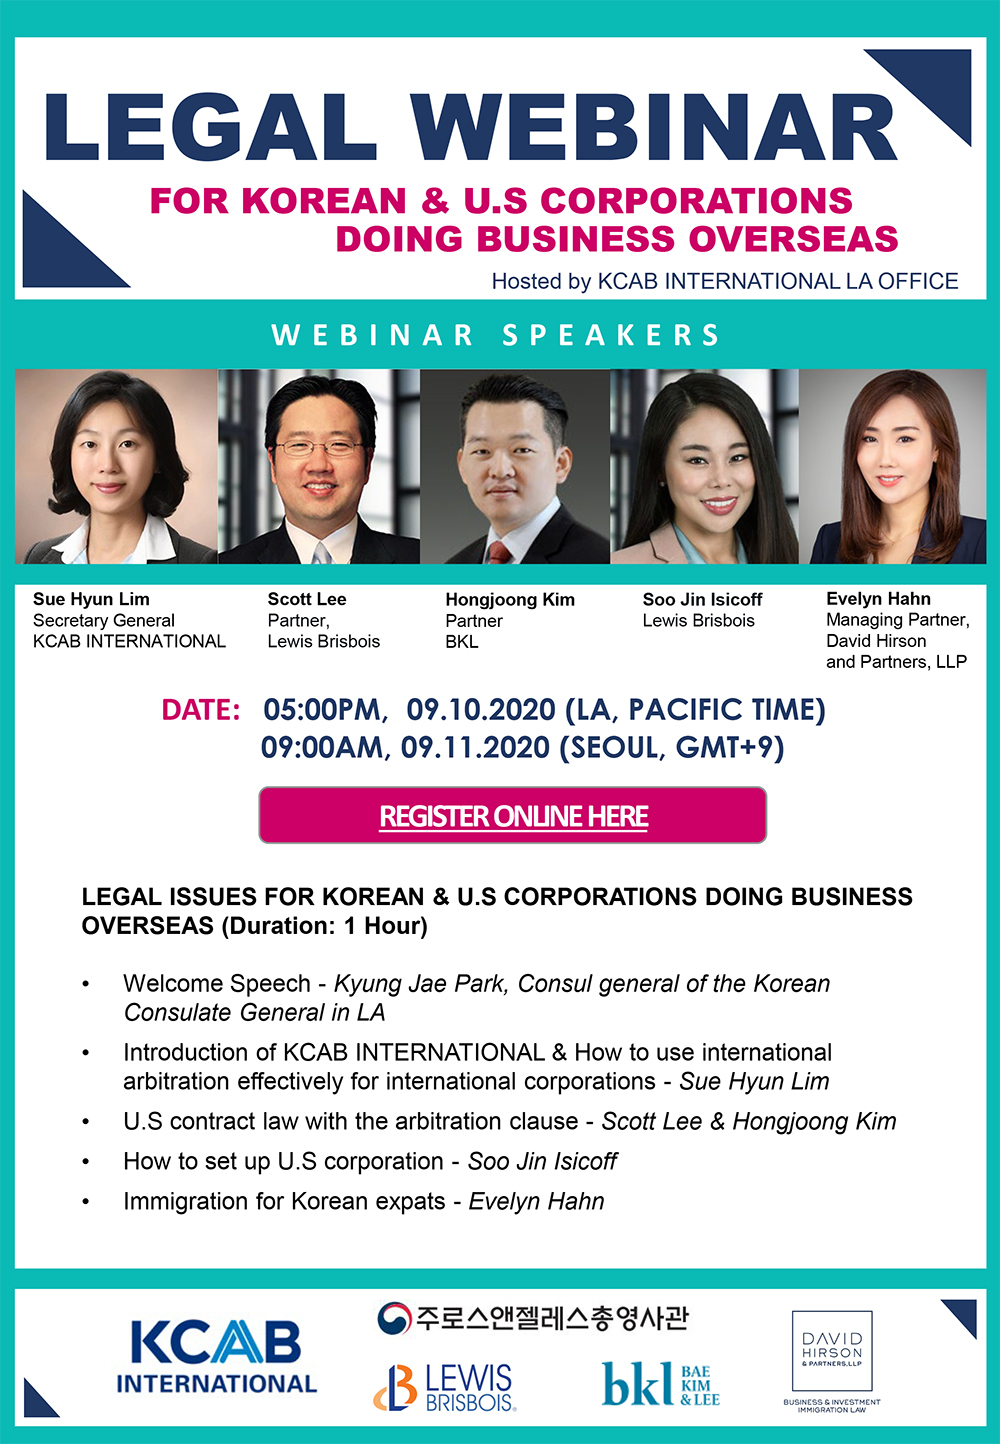 [KCAB INTERNATIONAL] Legal Webinar for Korean & U.S Corporations doing business overseas